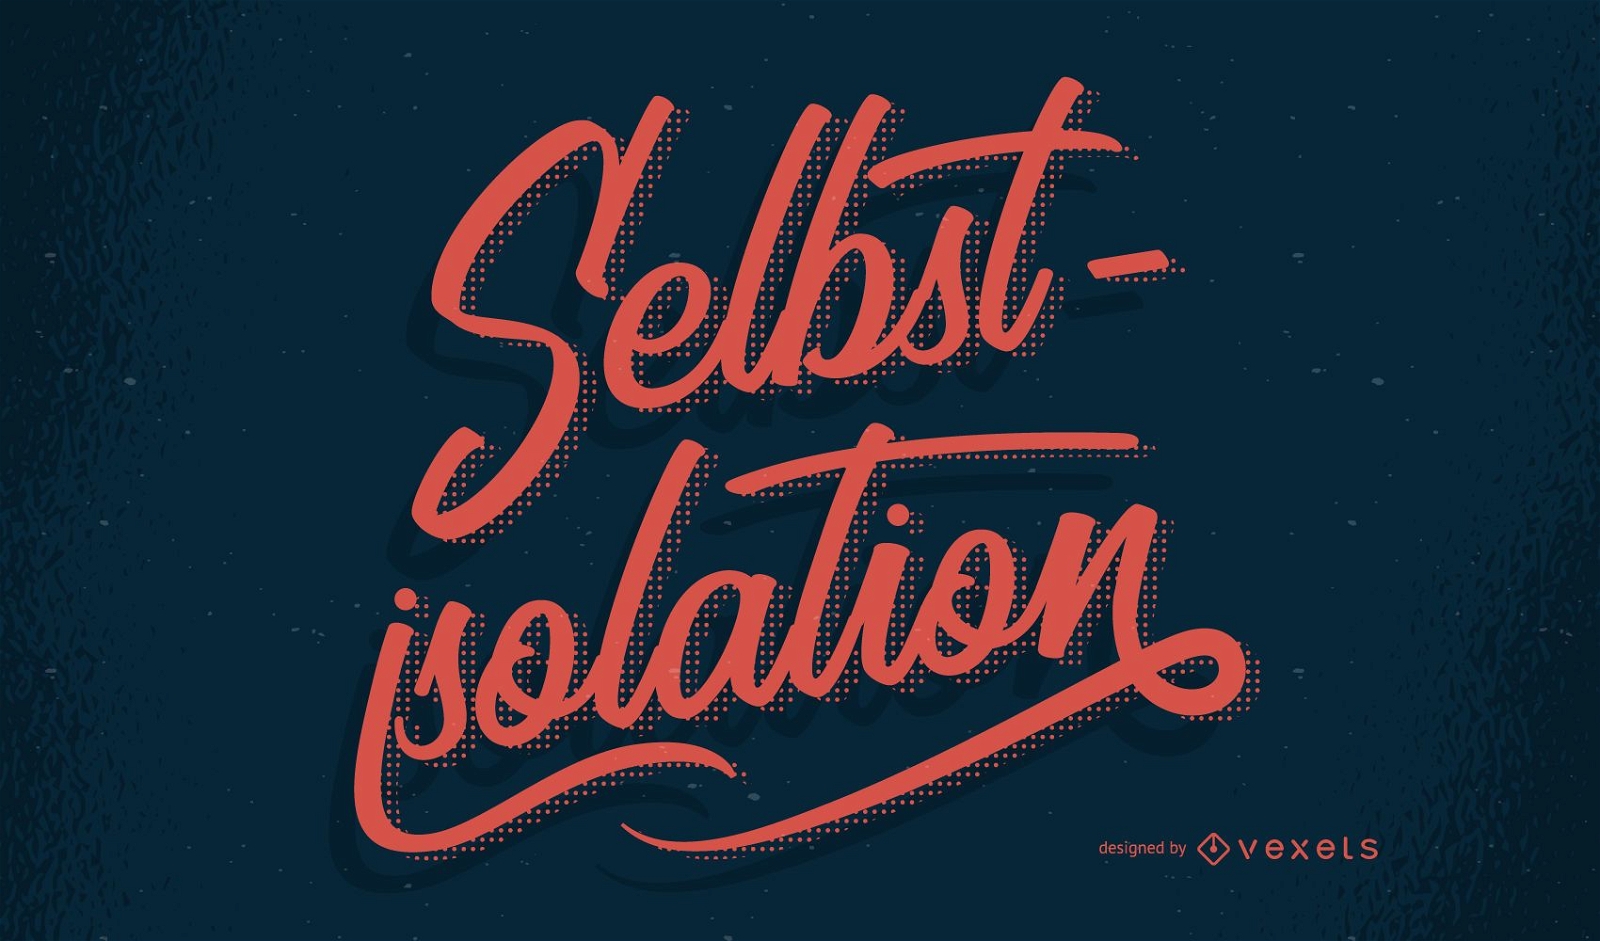 Self isolation german lettering